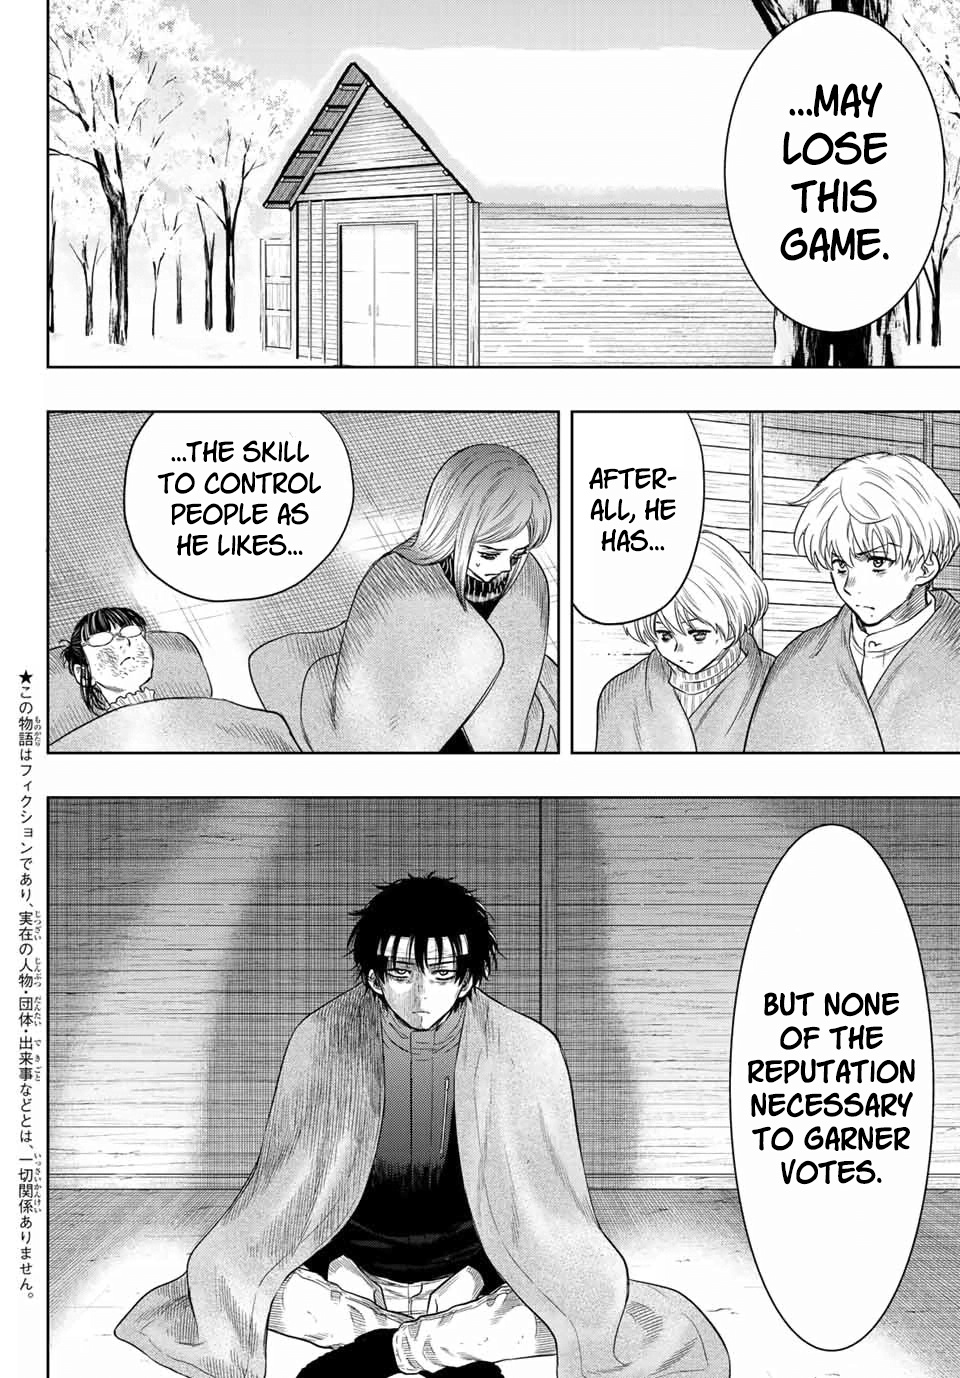 Tomodachi Game - Page 2